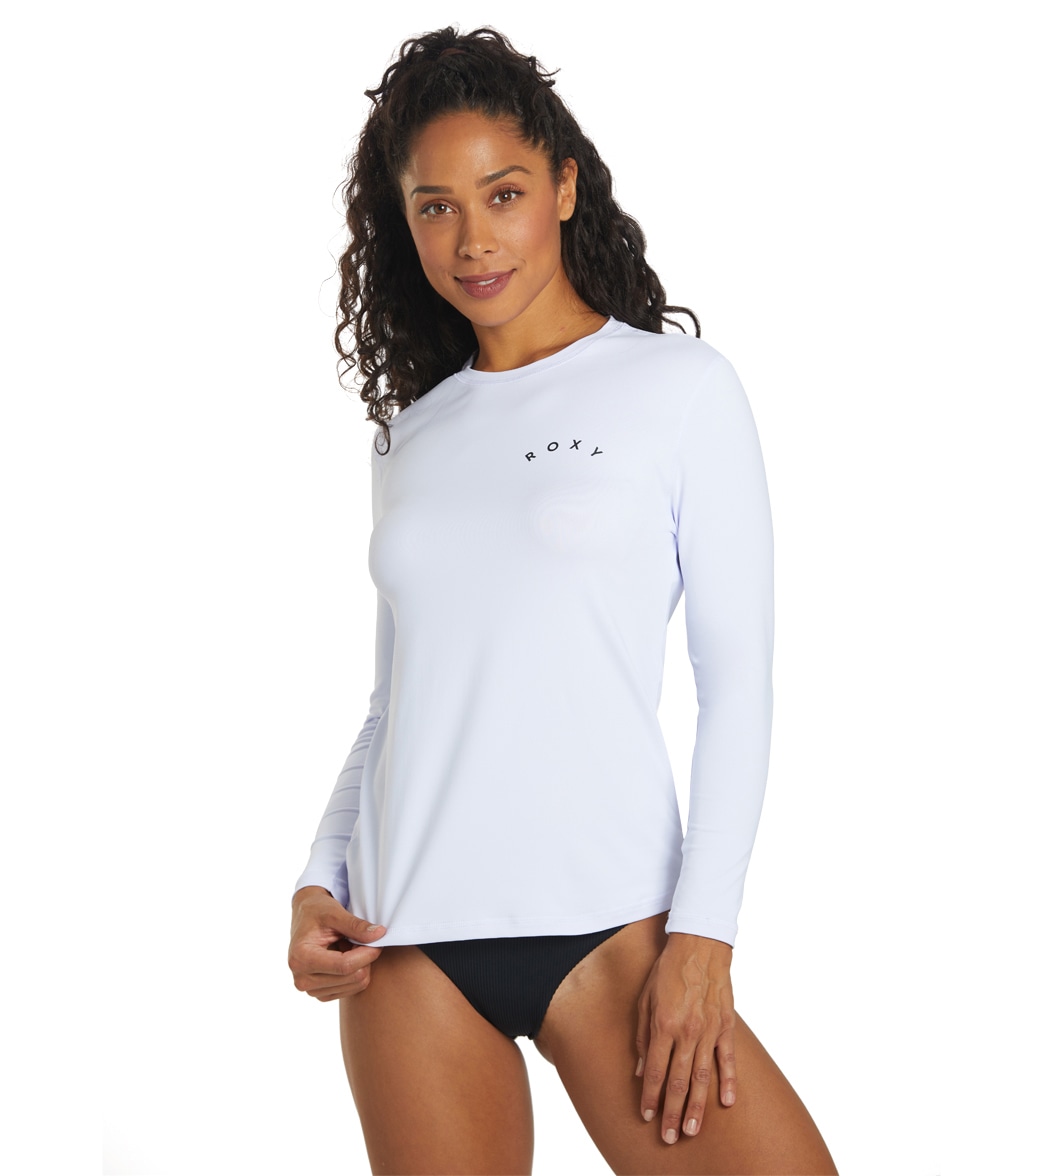 Roxy Women's Enjoy Waves Long Sleeve Upf 50 Surf Shirt - Bright White Large - Swimoutlet.com